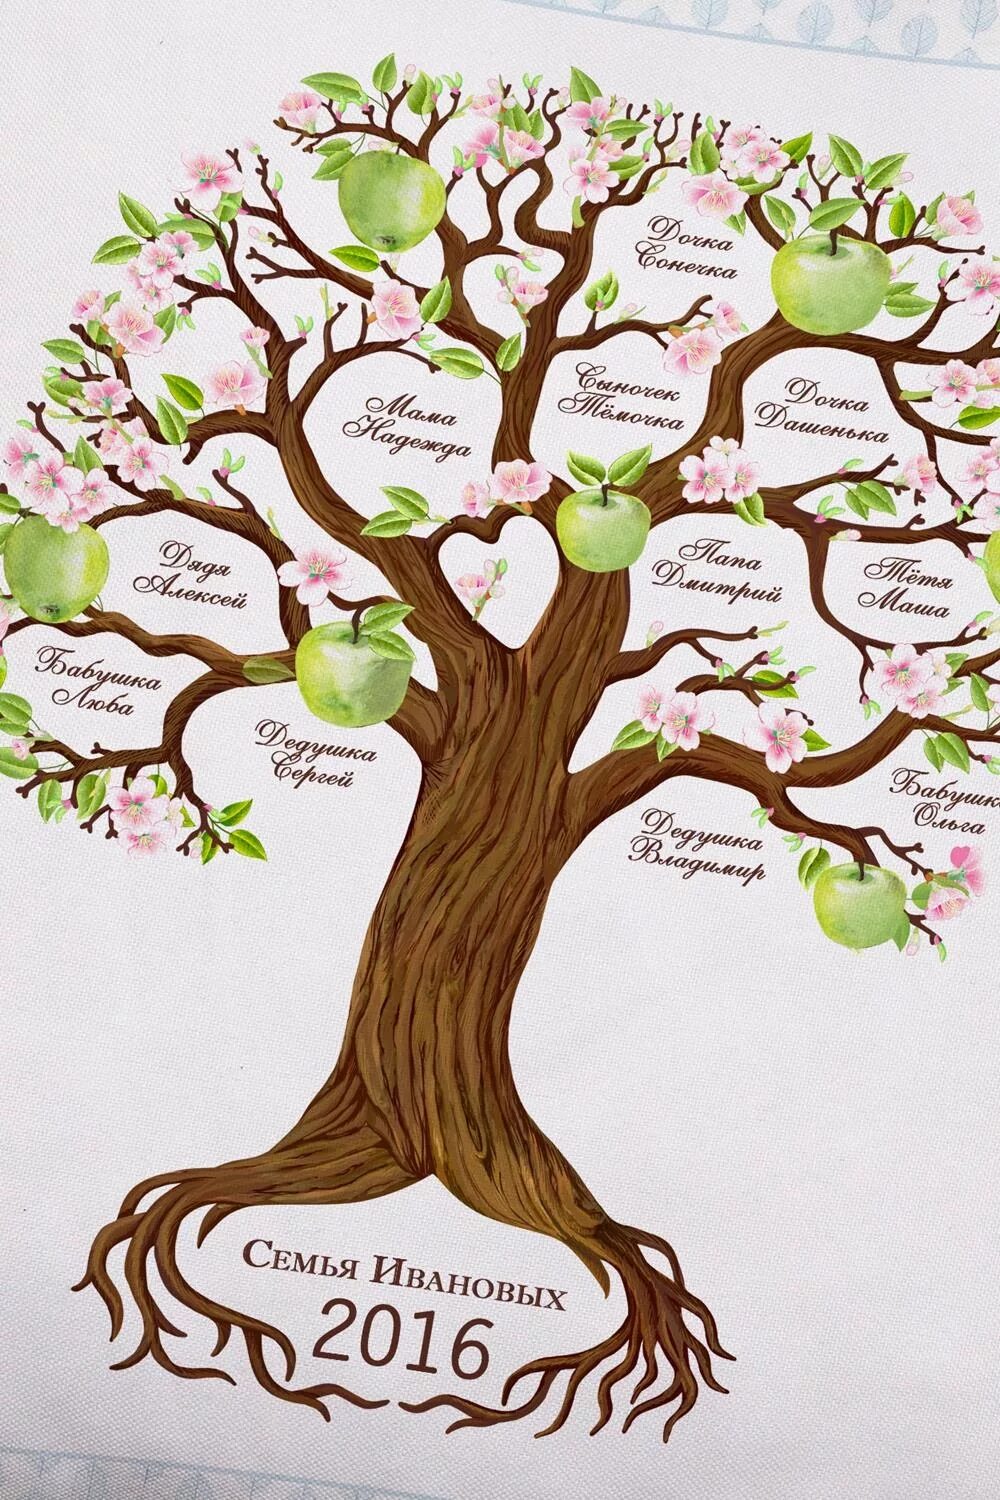 Красивое имена дерева. Дерево семьи. Родословное Древо. Генеалогическое дерево в виде дерева. Красивое дерево для родословной.